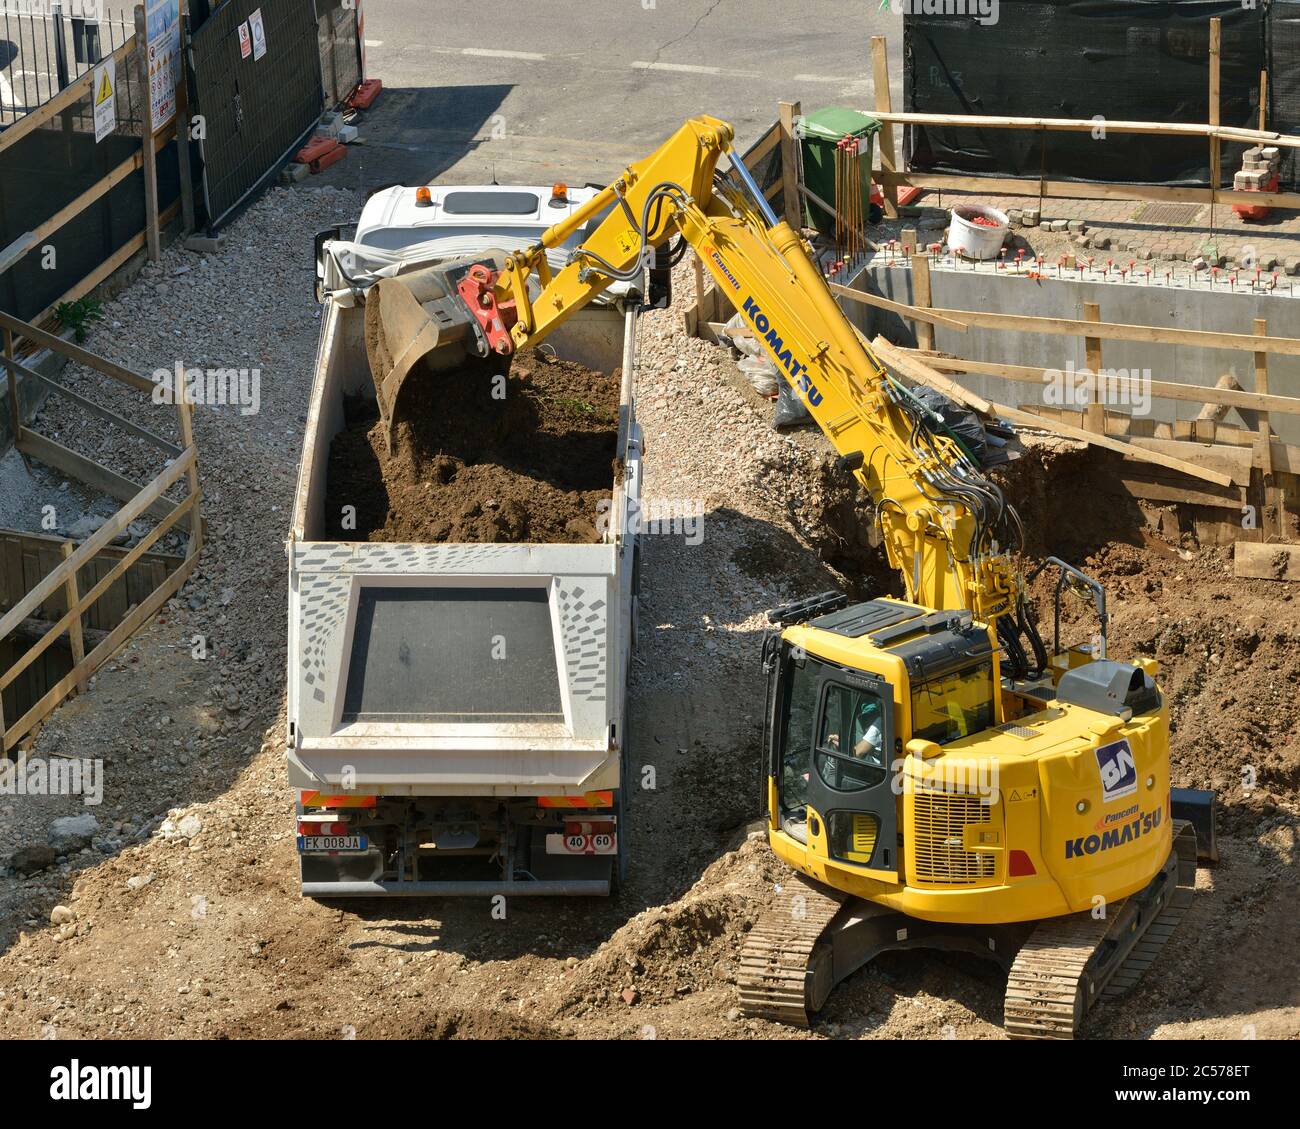 hydraulic excavator Komatsu digging building foundation, unloading soil into a dump truck Stock Photo